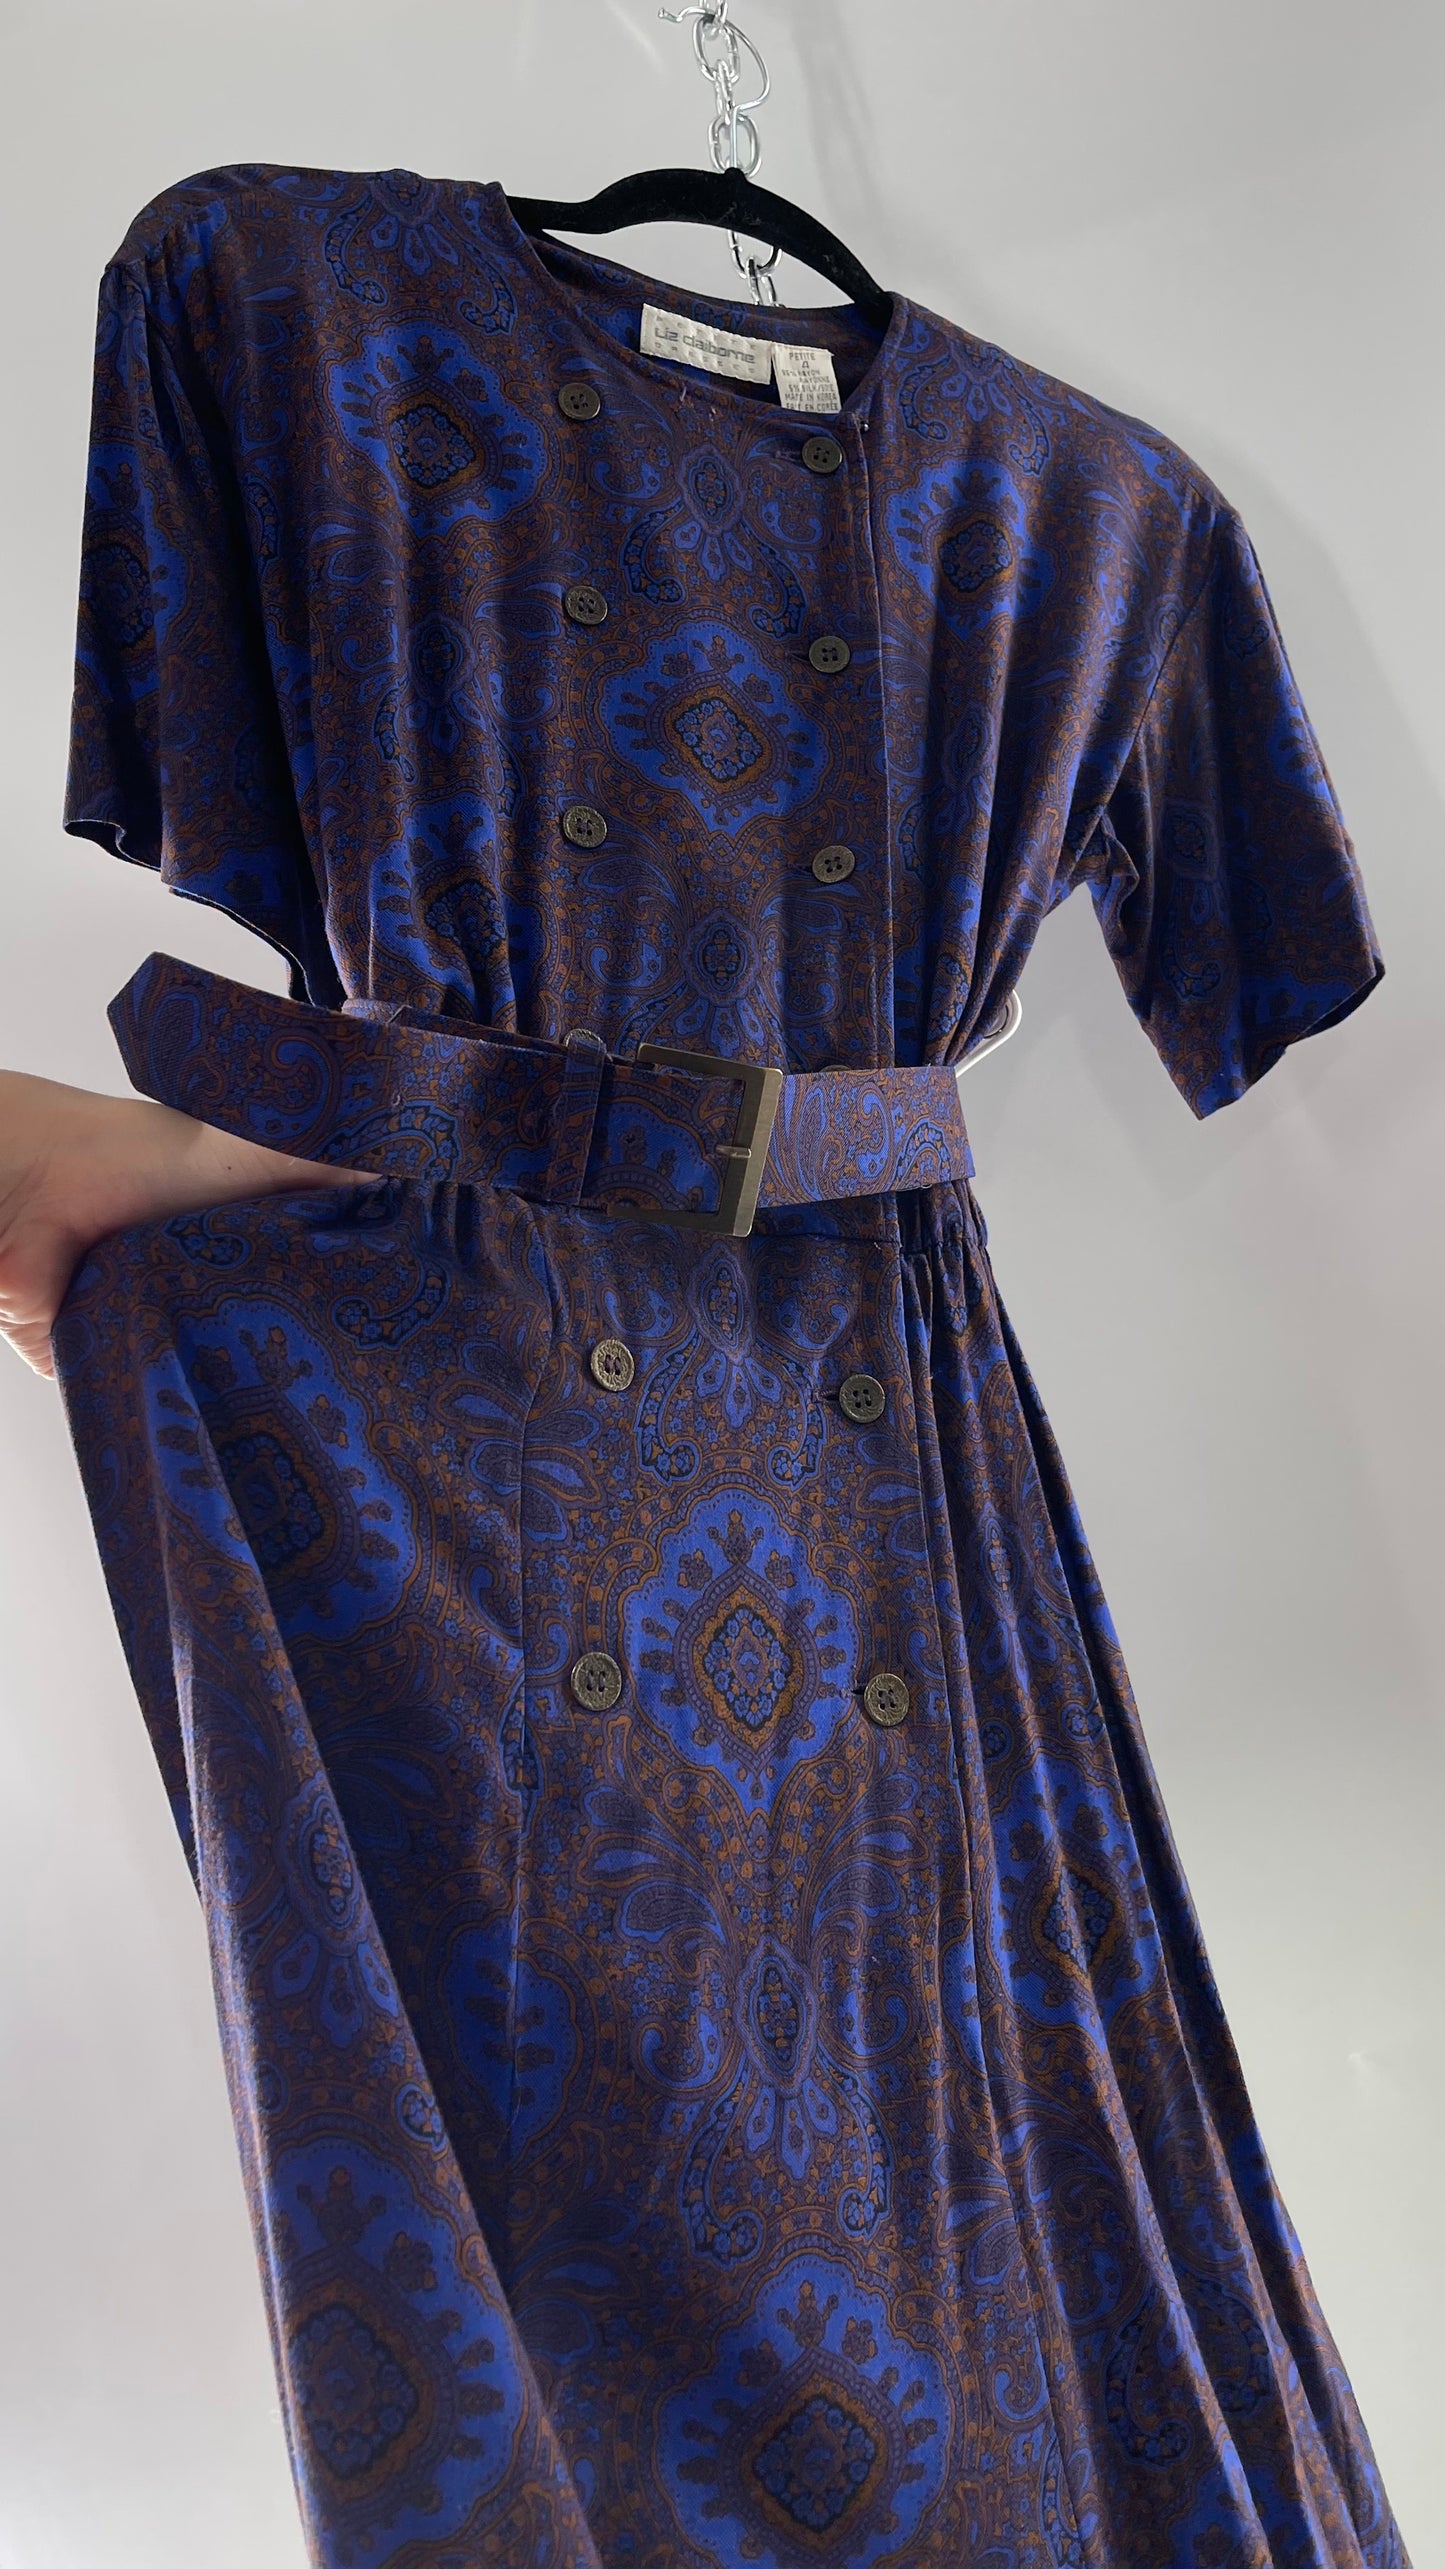 Vintage Liz Claiborne Cobalt Blue and Mustard Paisley Patterned 60s Style Dress(4)